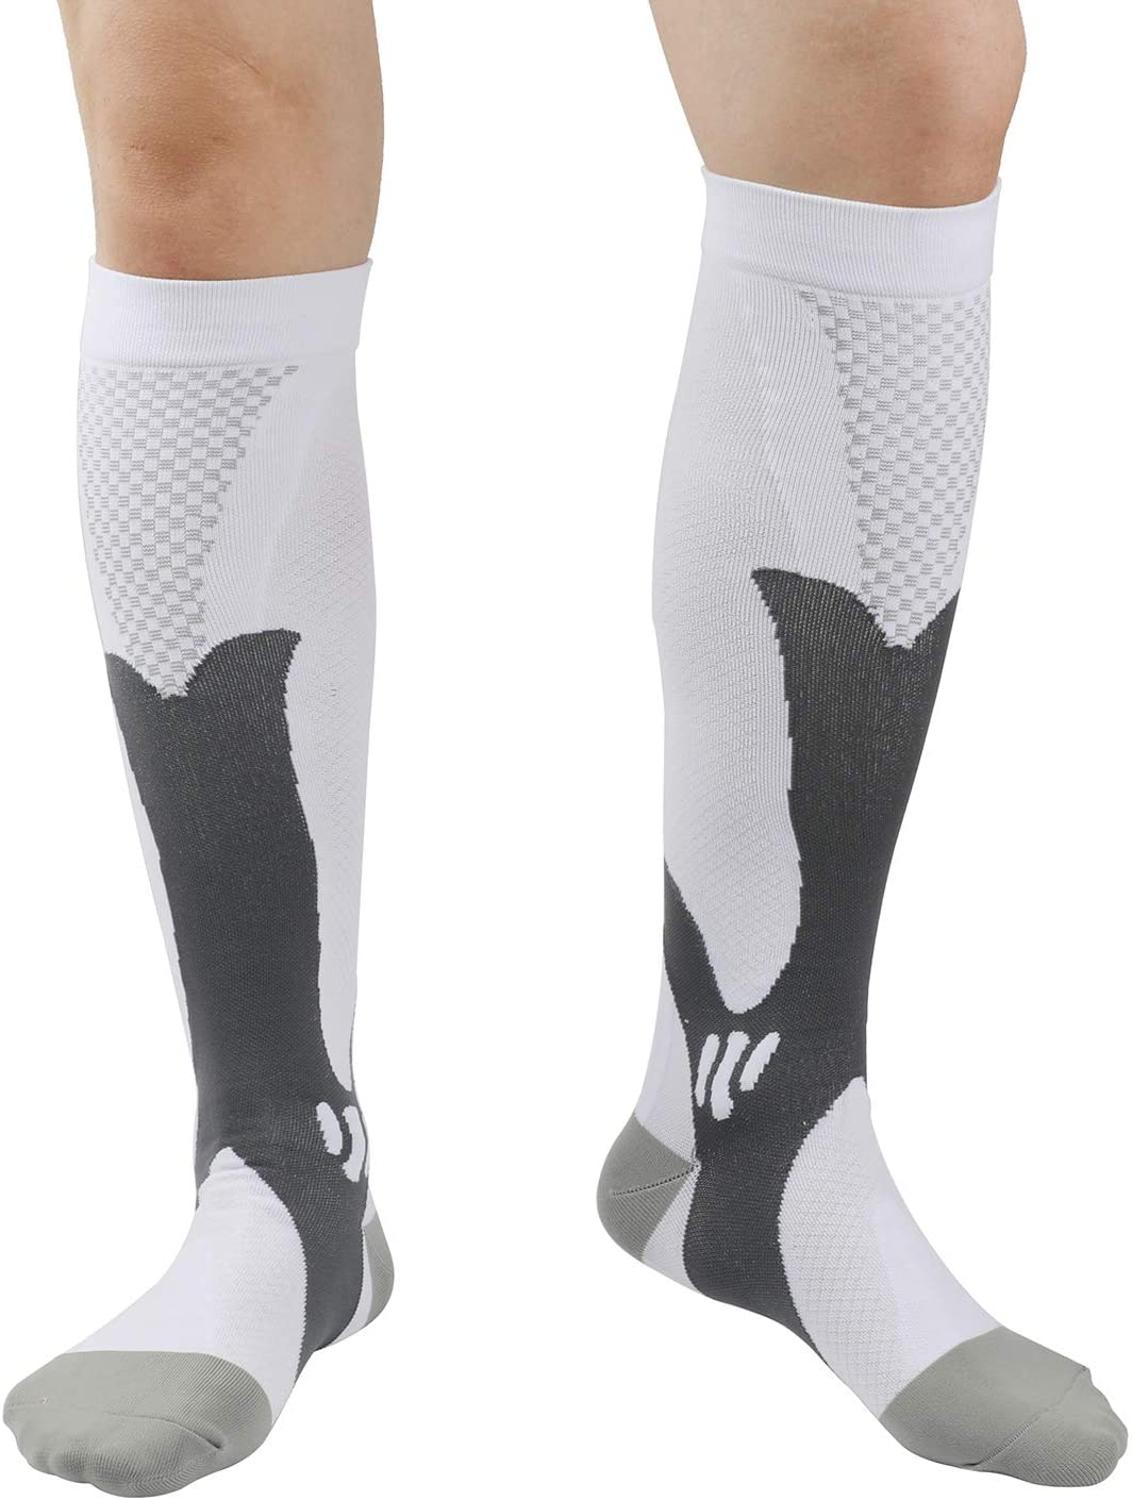 Compression Athletic Socks